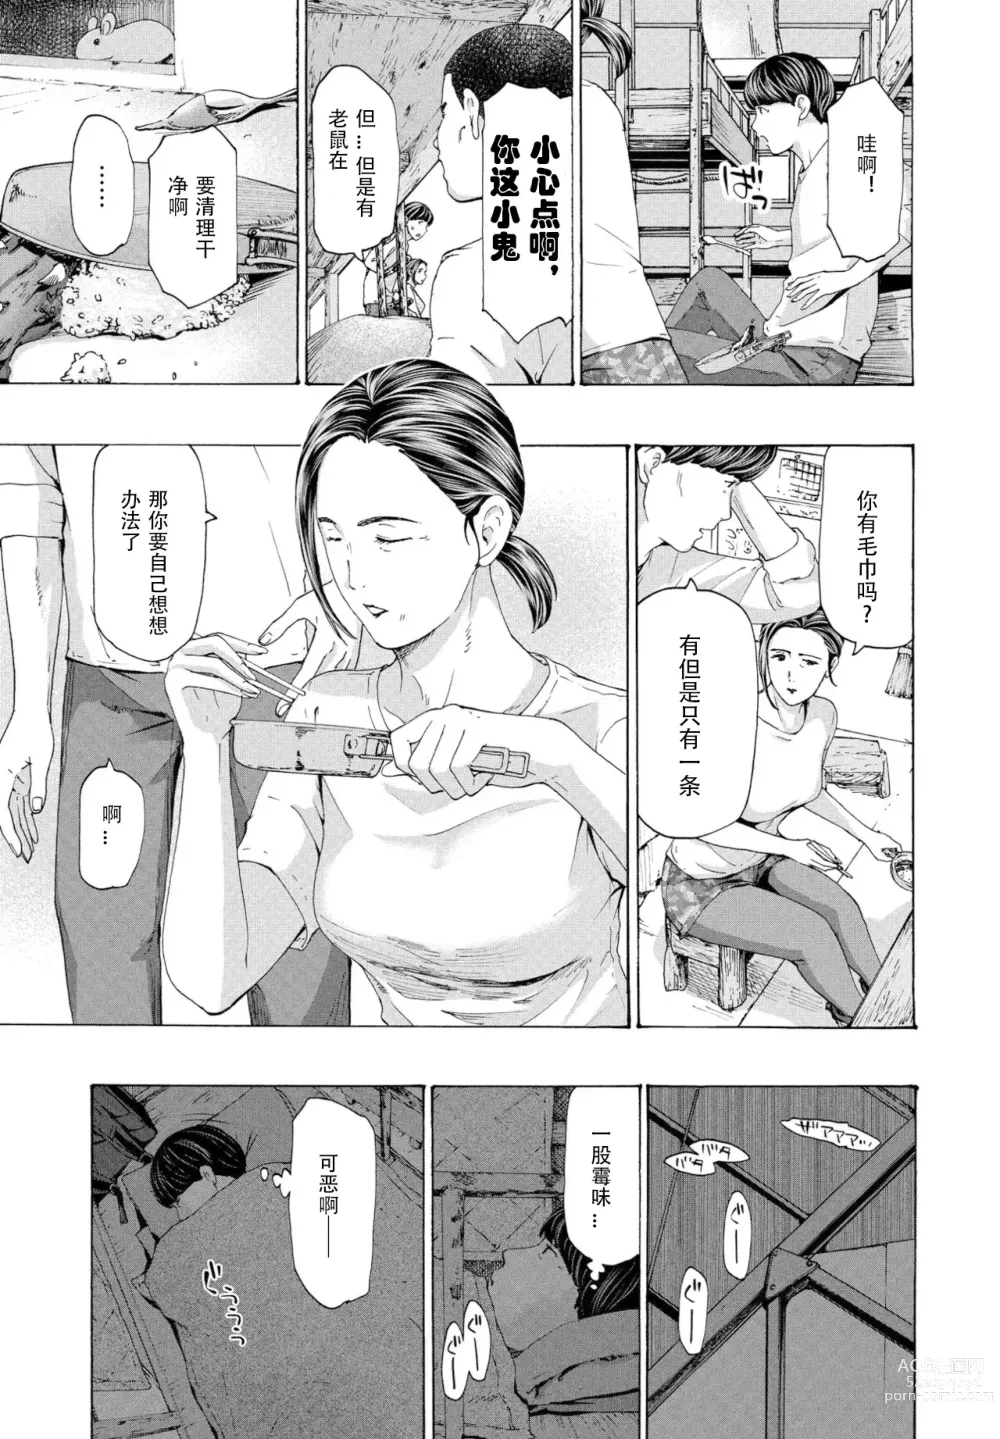 Page 5 of manga 避难小屋